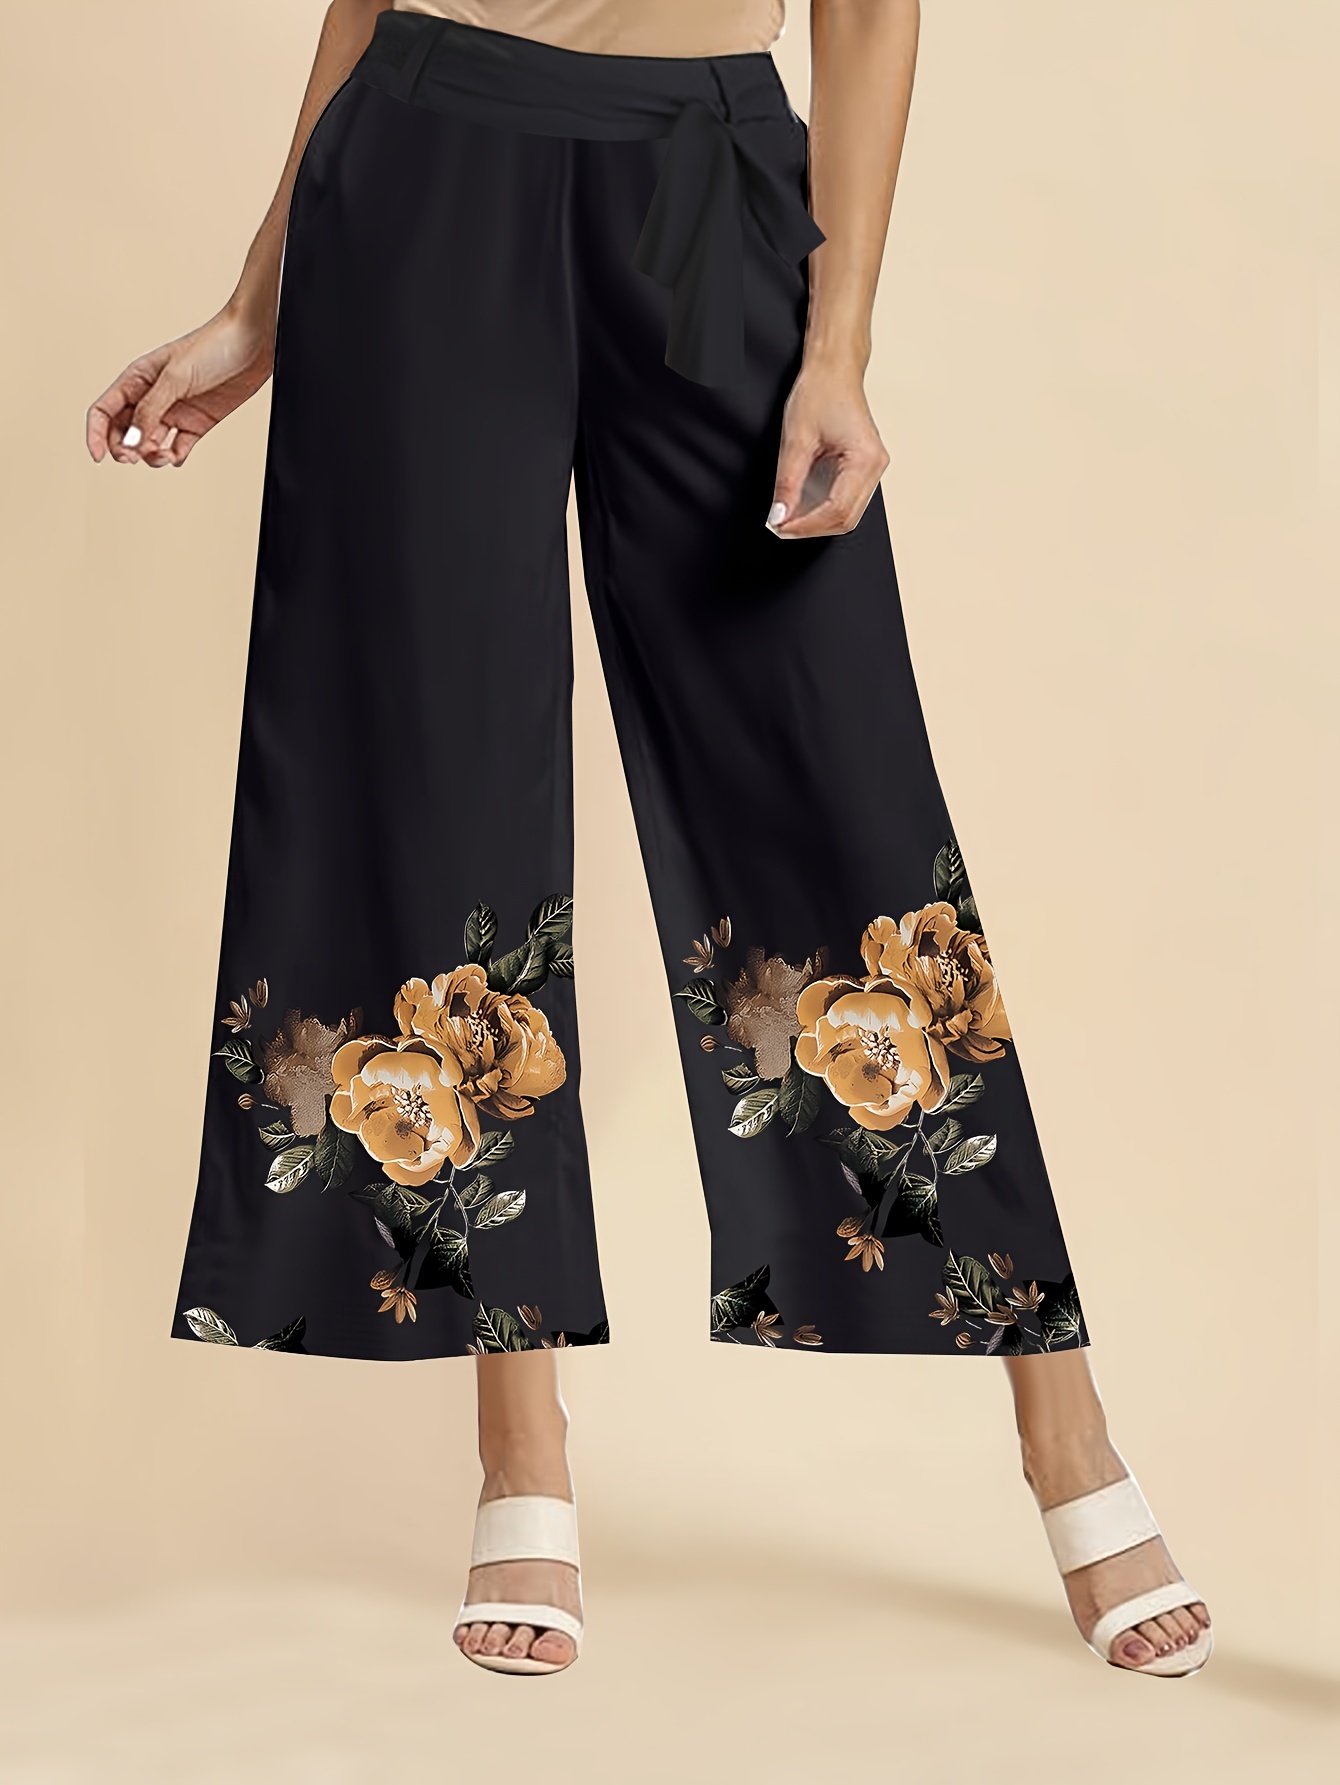 Plus Size Floral Embroidery High Waist Pants Black